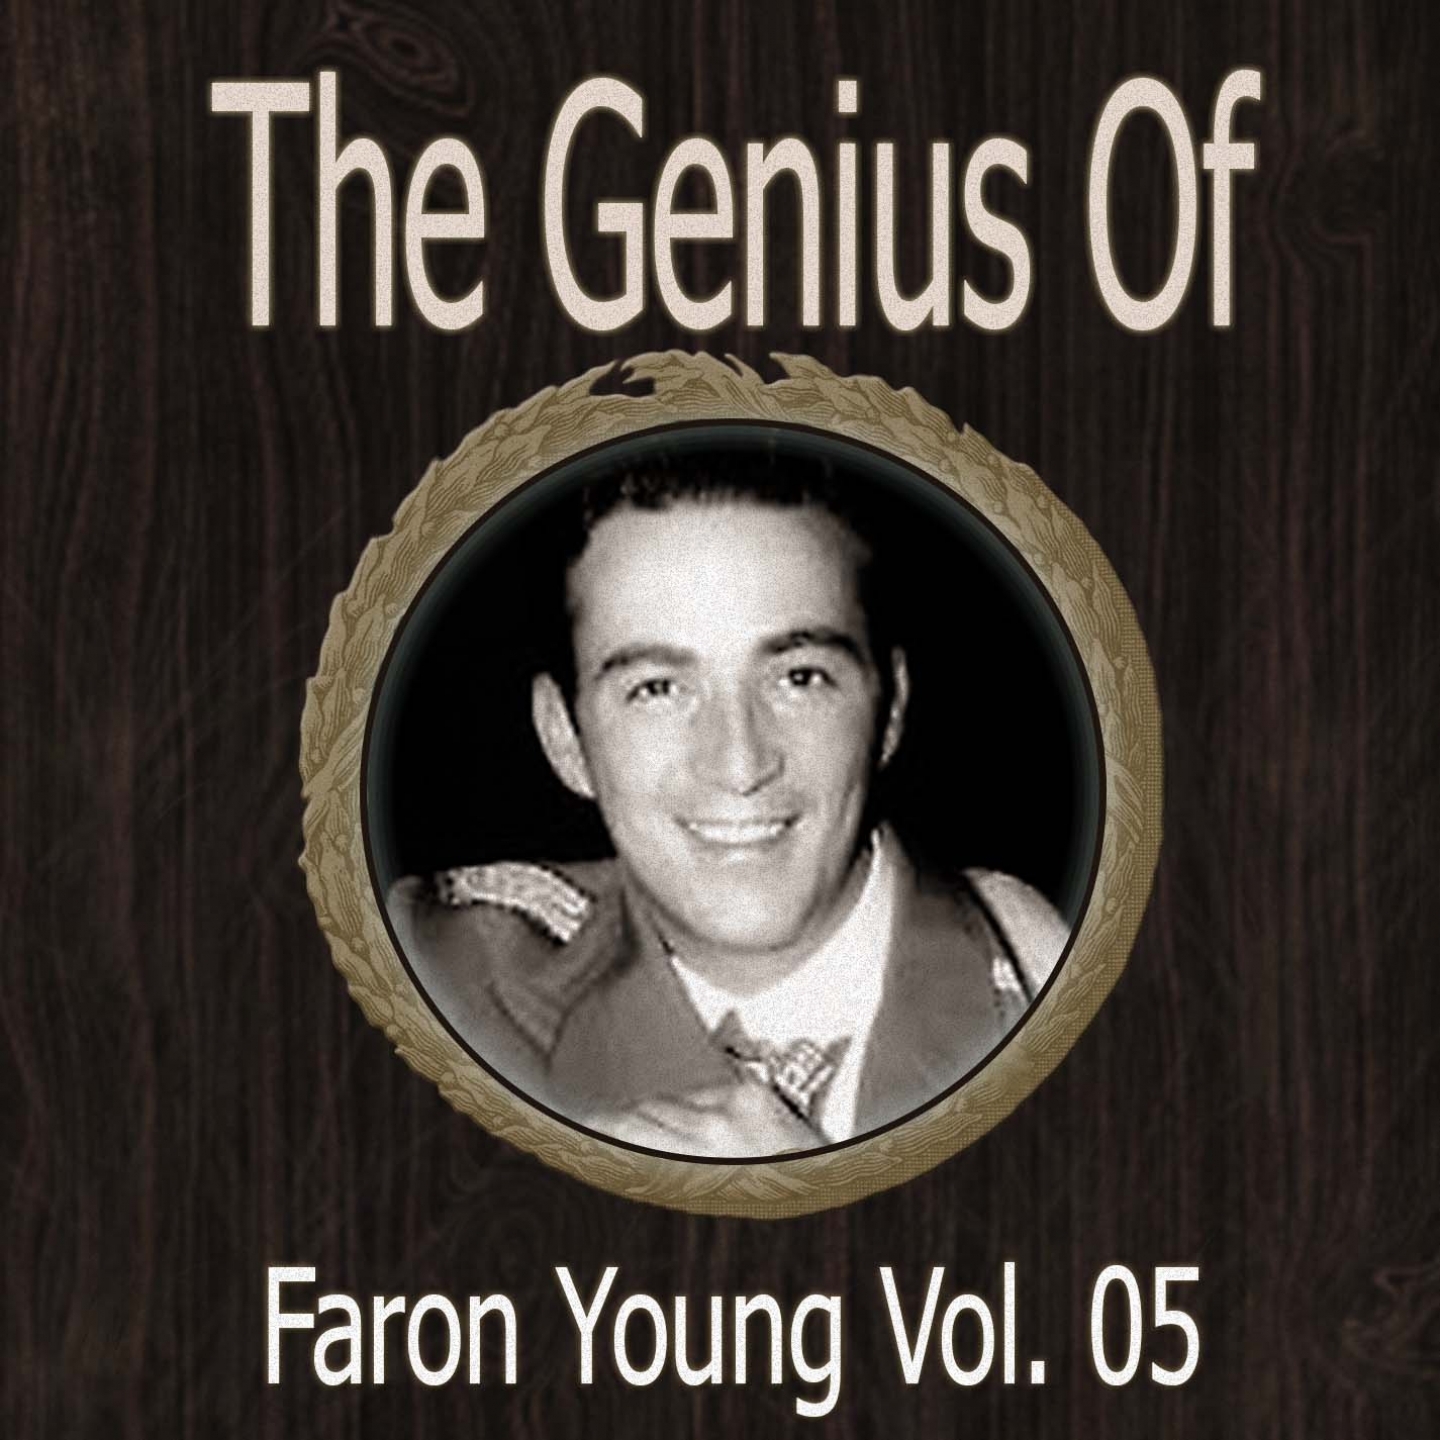 The Genius of Faron Young Vol 05